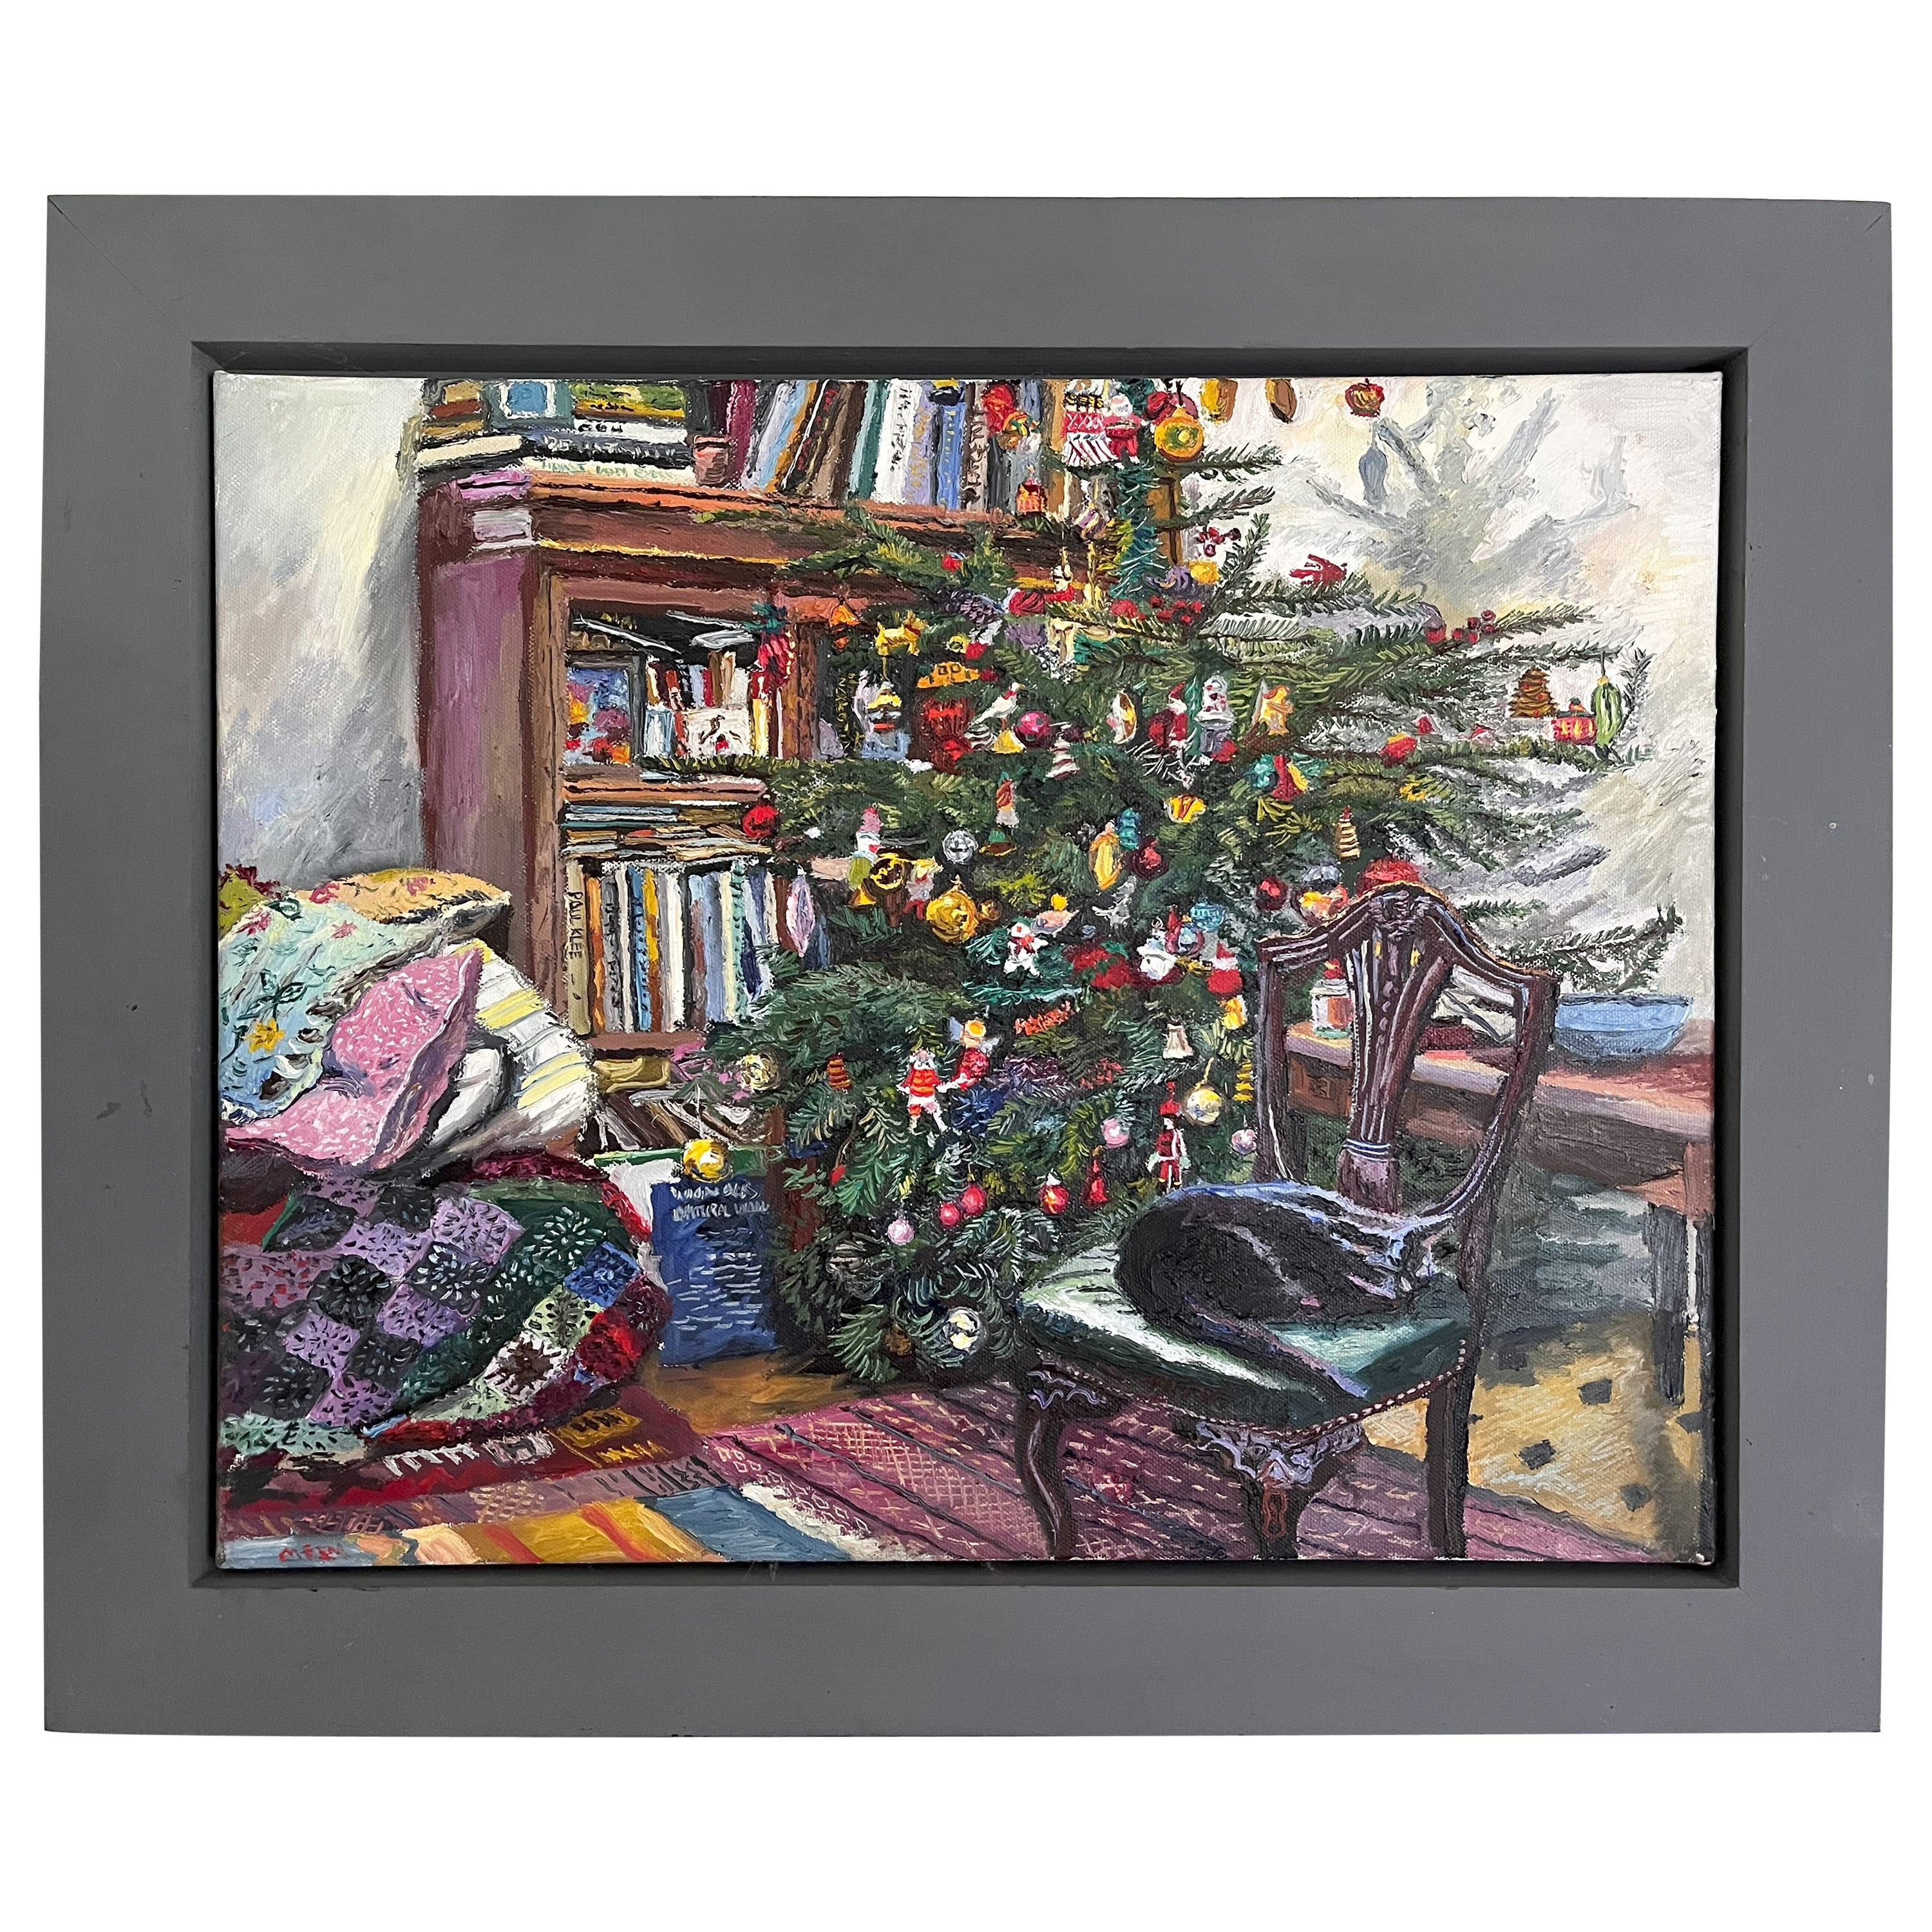 CAT SLEEPING BY CHRISTMAS TREE by Mellisa Scott-Miller For Sale